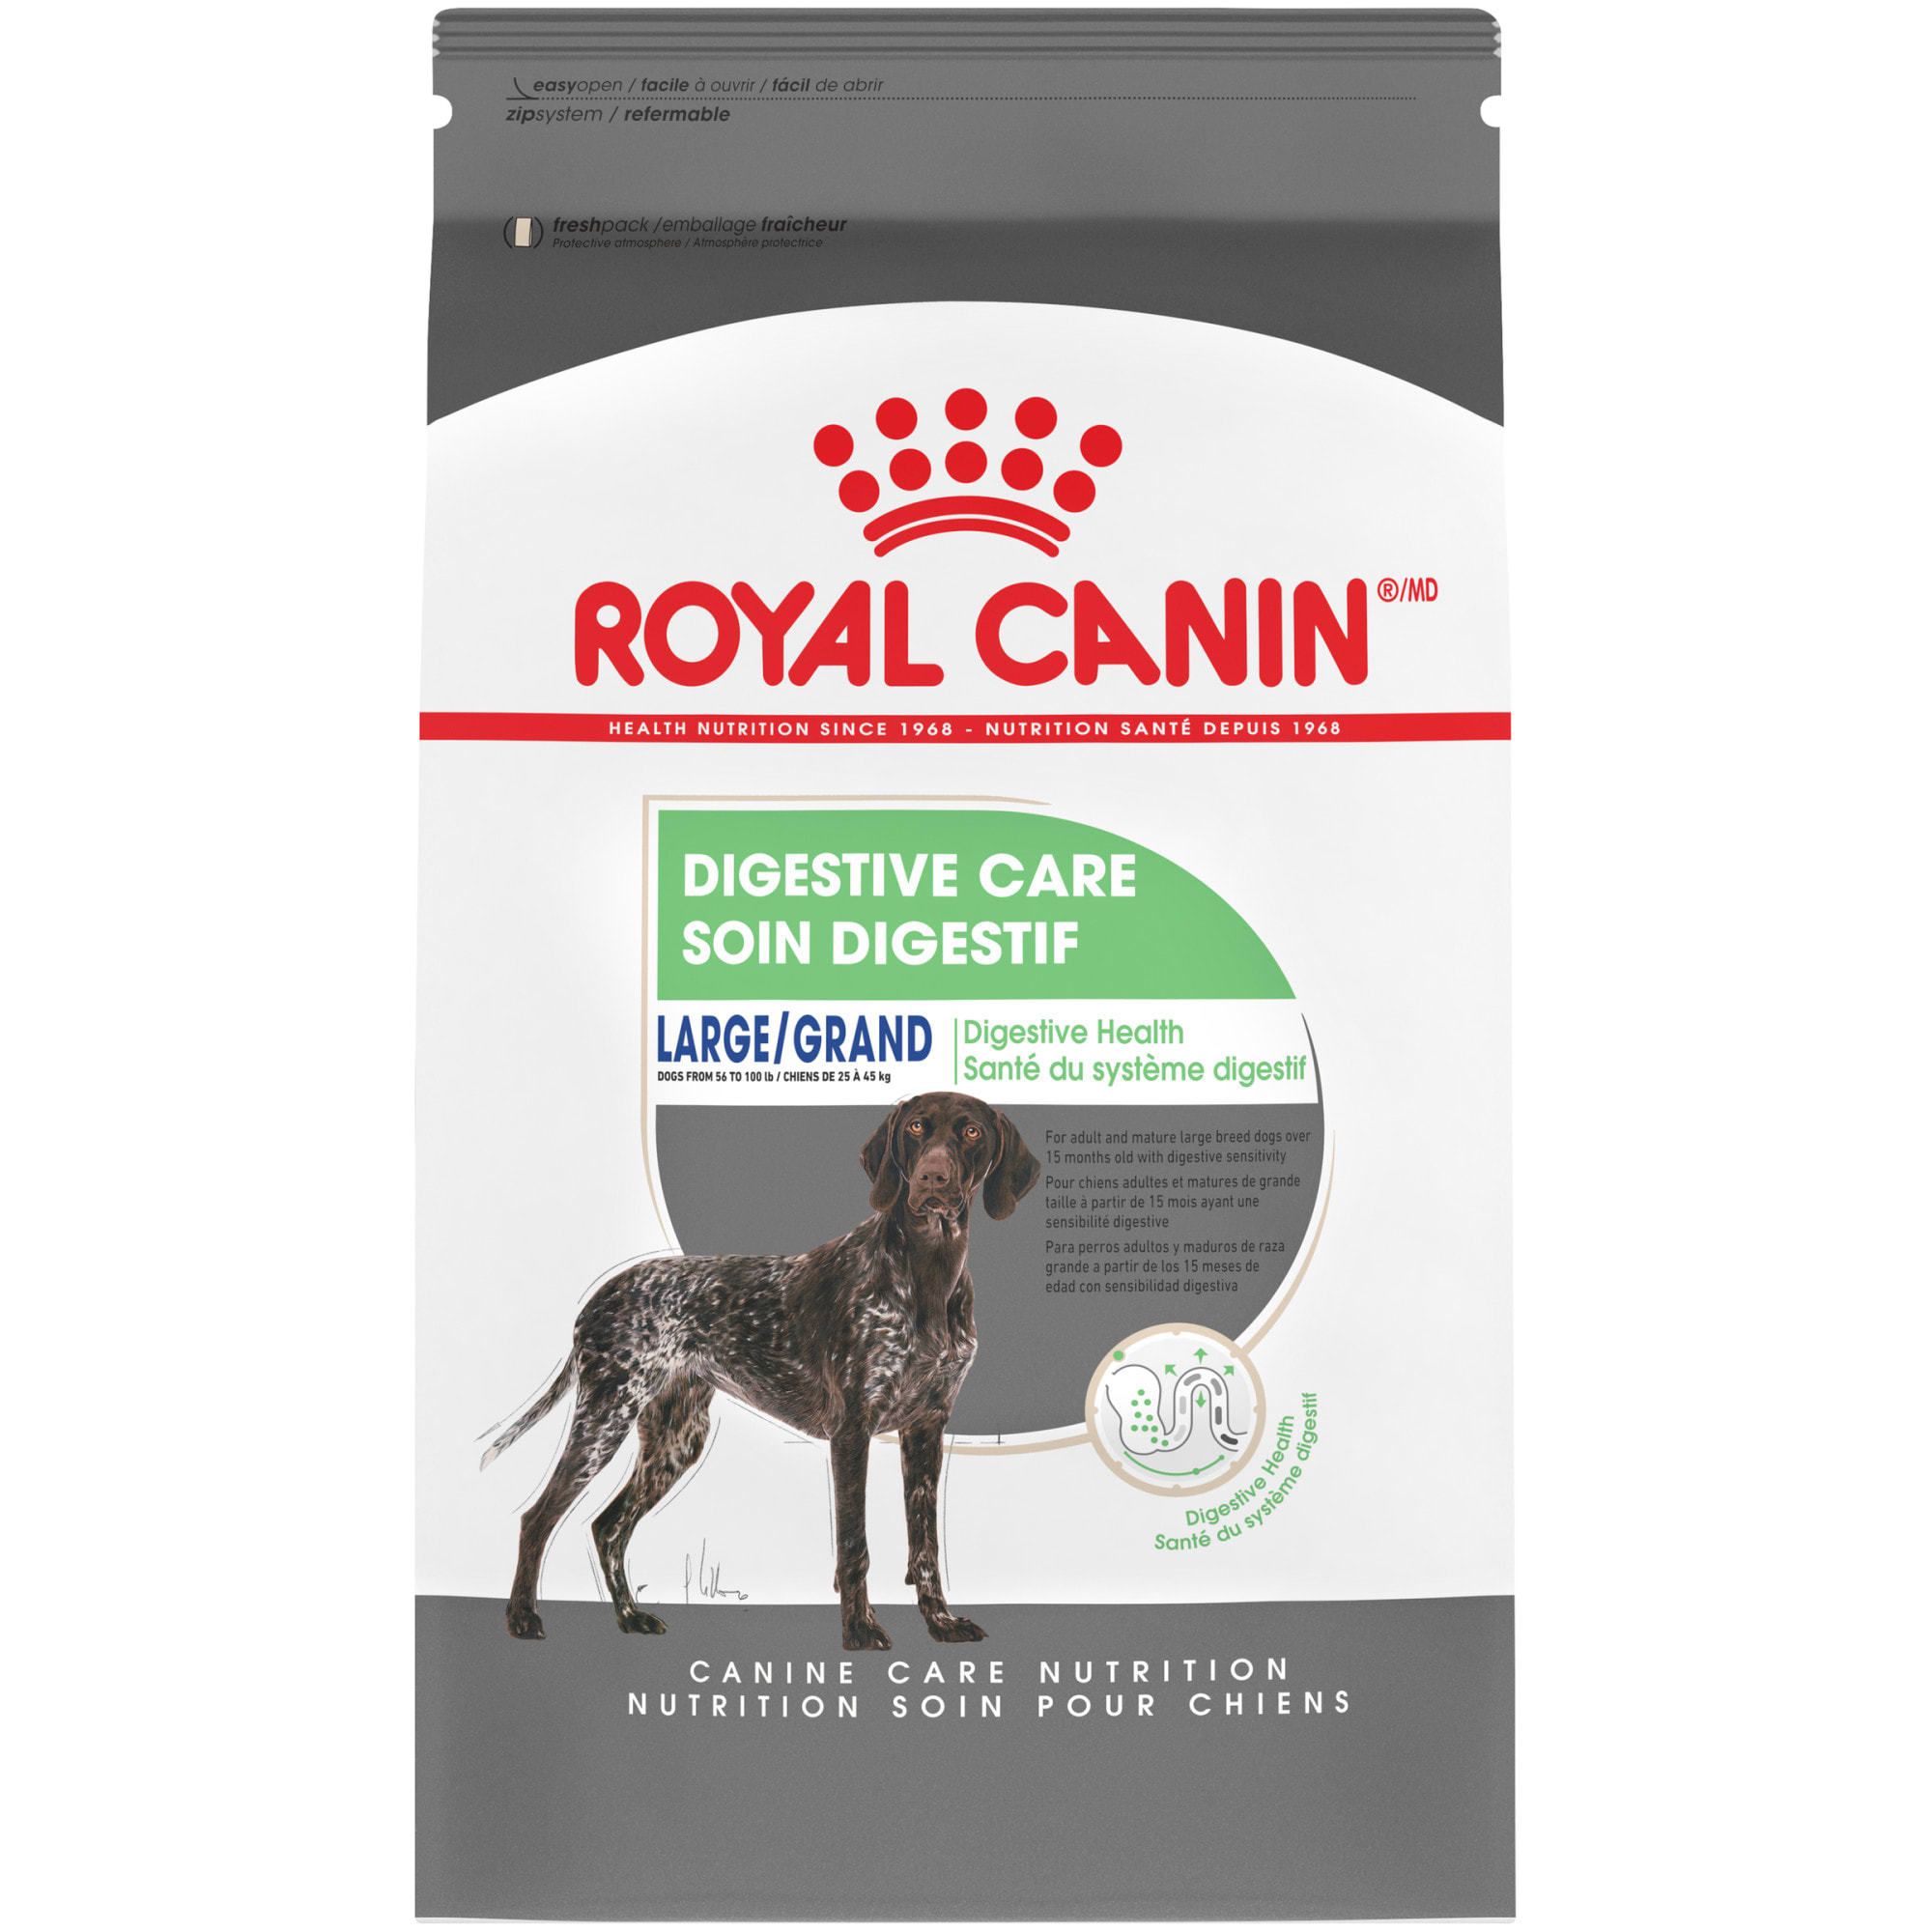 royal canin mini digestive care 10 kg